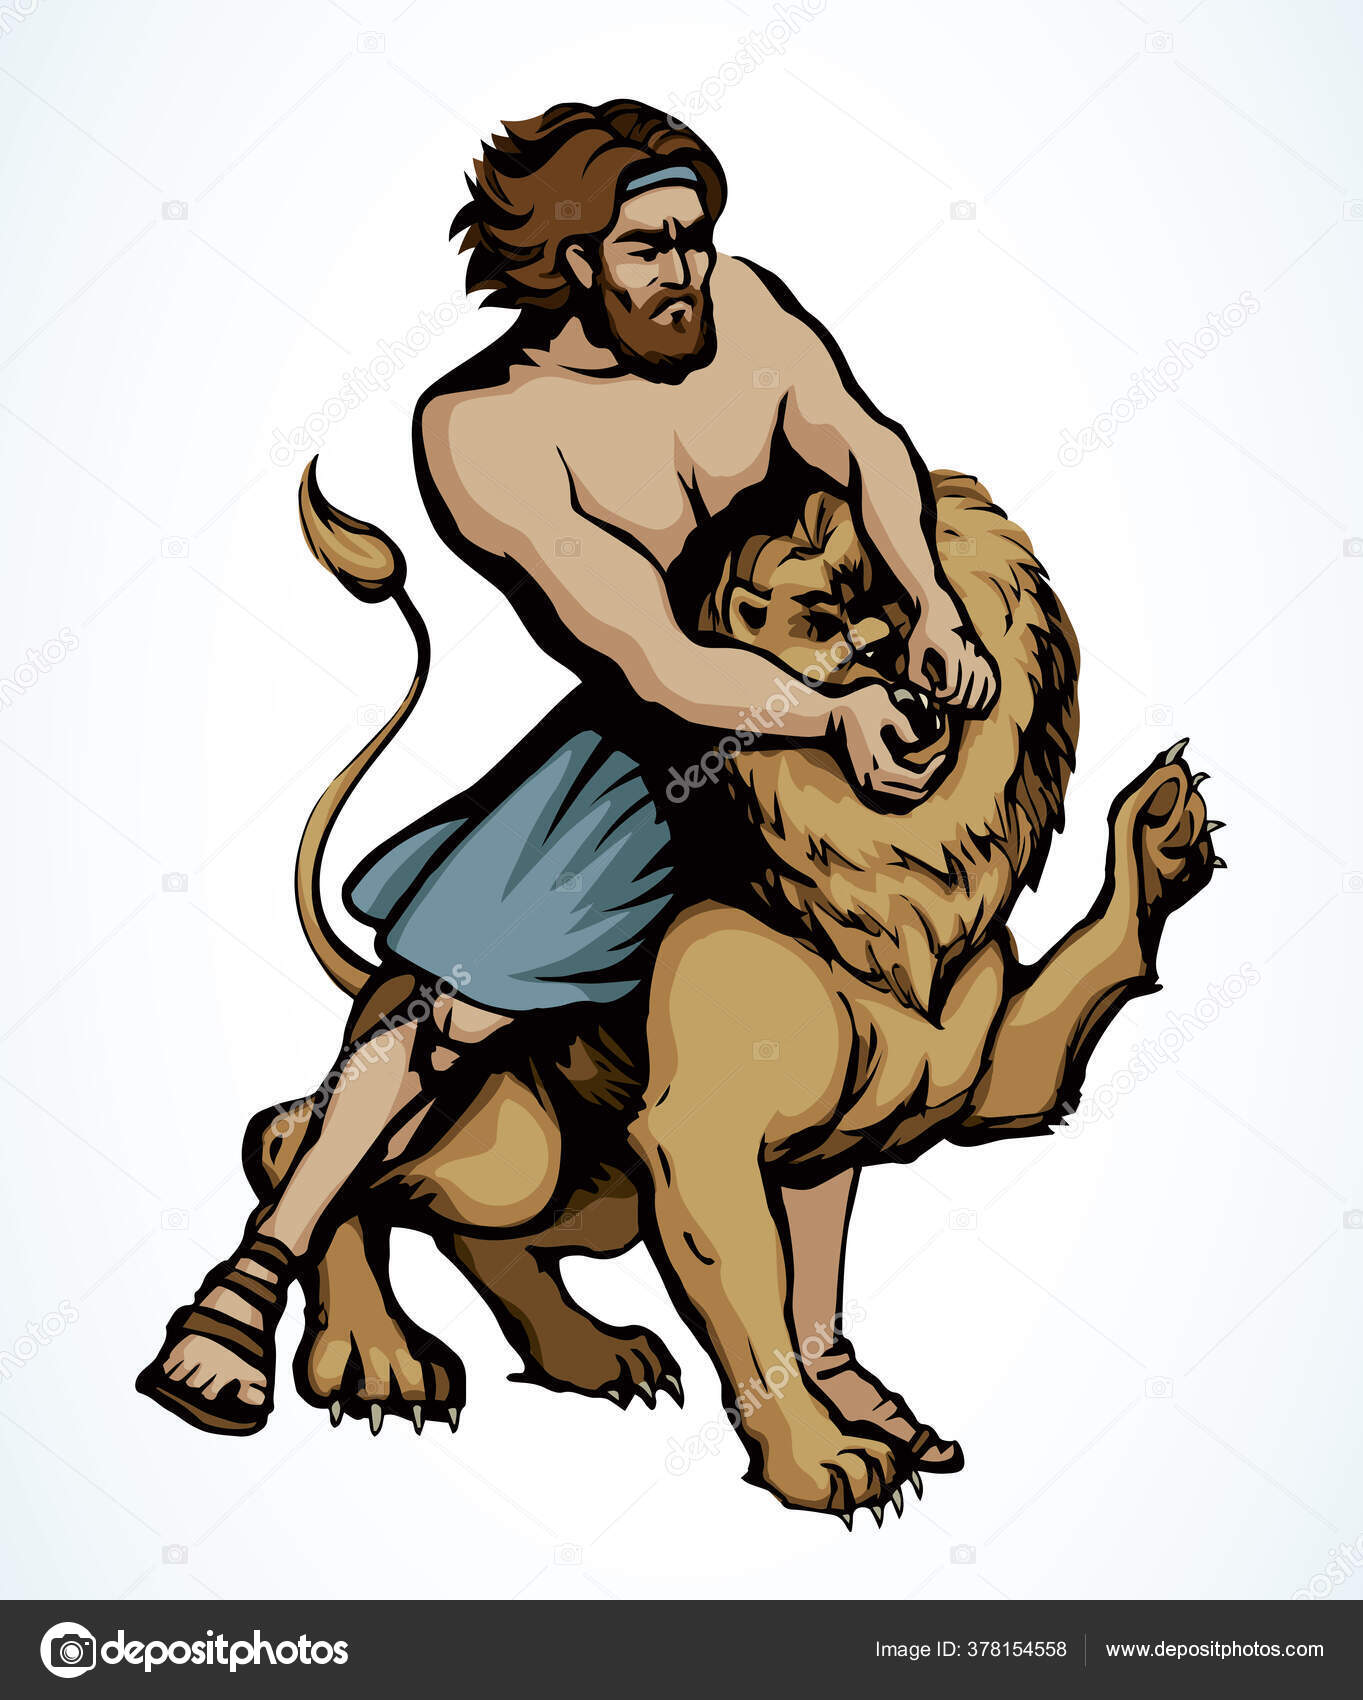 Борьба Самсона со львом